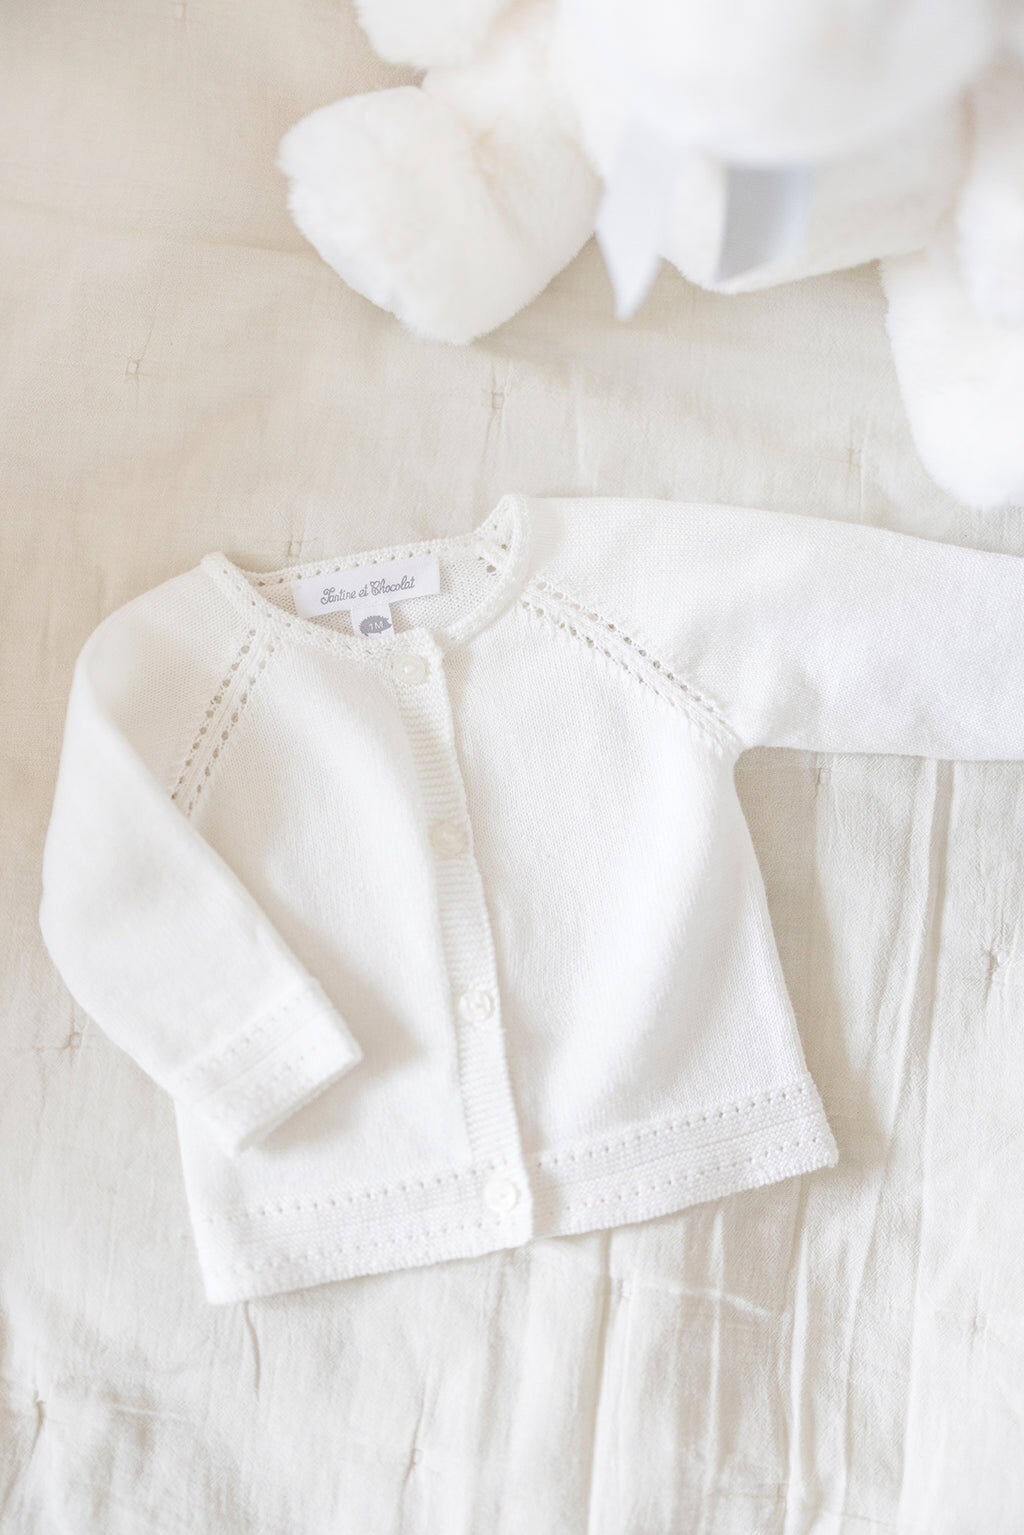 Cardigan - Mother-of-pearl Knitwear openwork